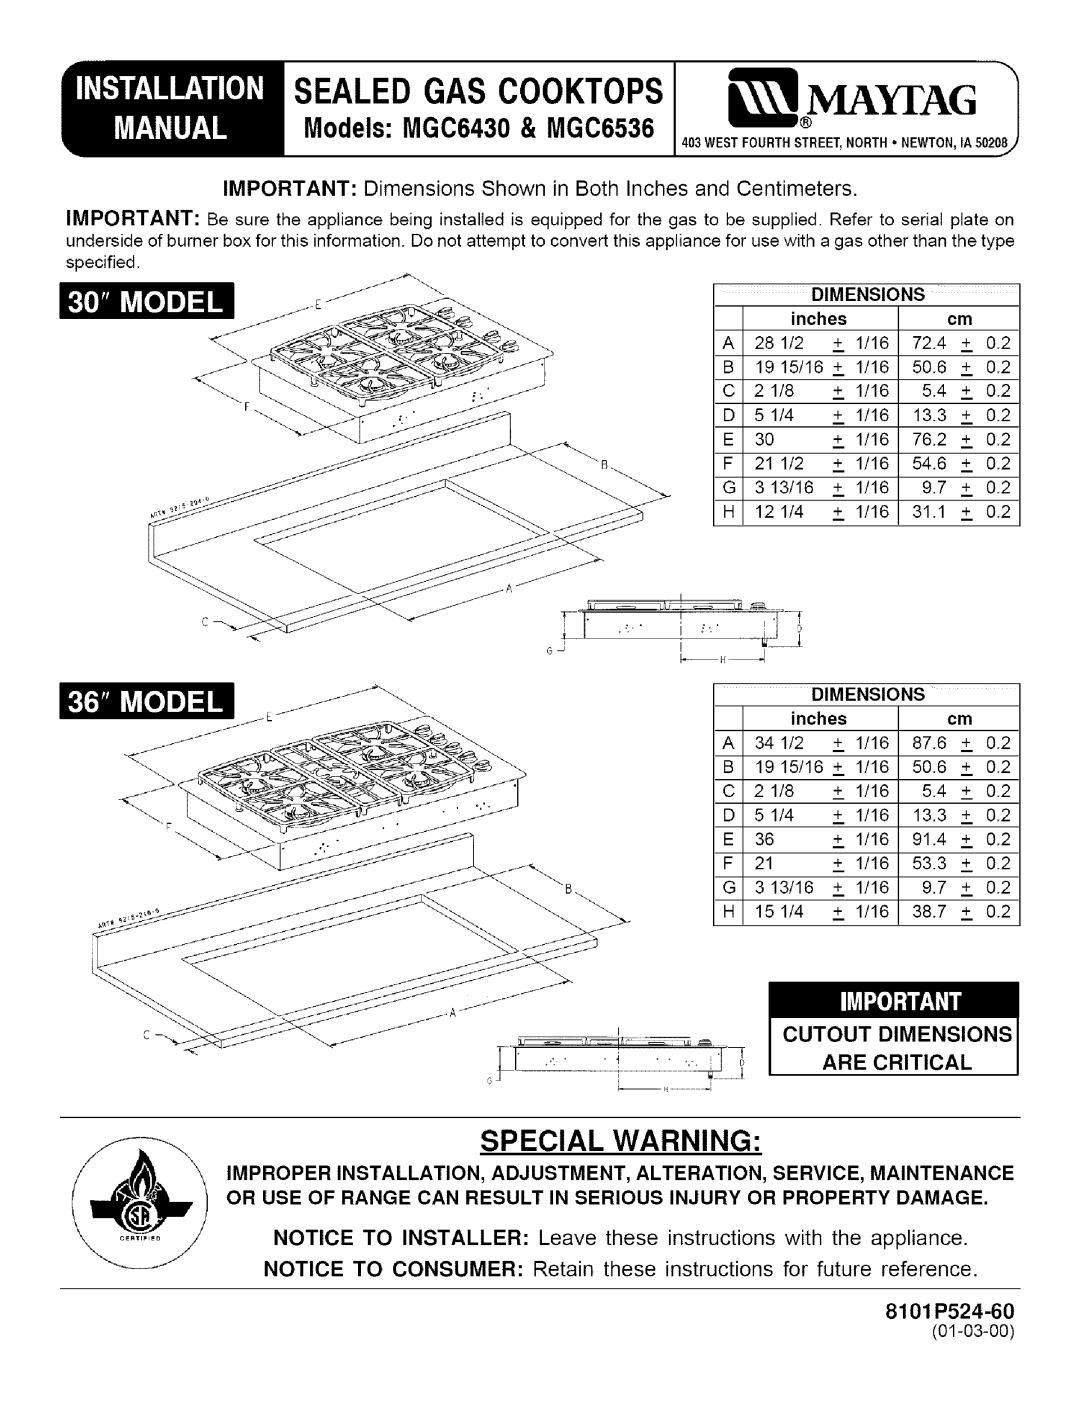 Maytag dimensions Sealedgas Cooktops, Special Warning, Models MGC6430 & MGC6536 